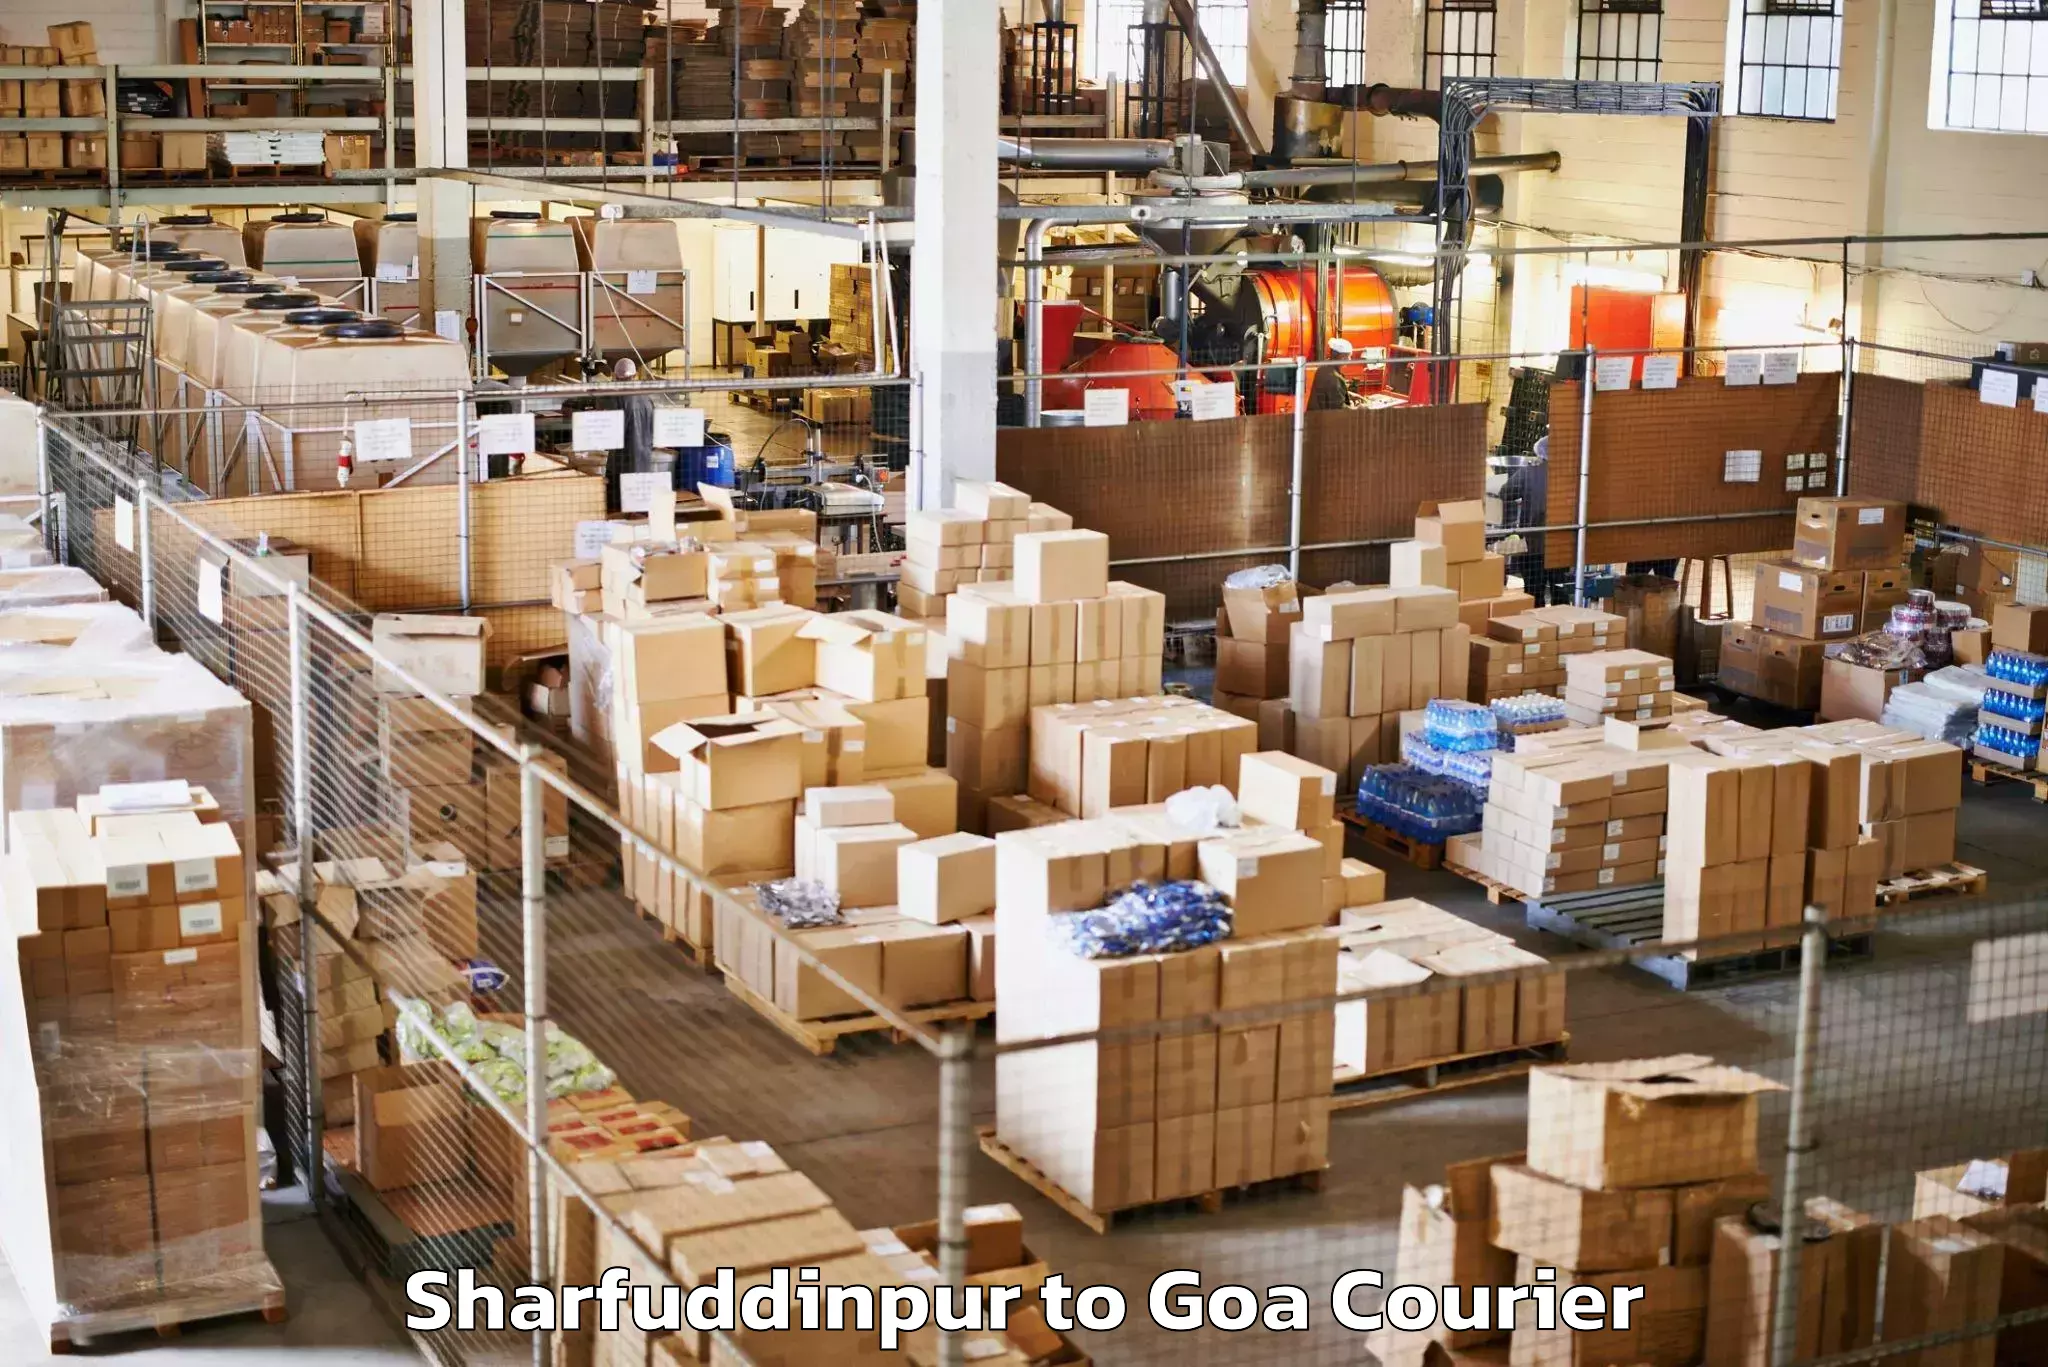 Baggage transport network Sharfuddinpur to Goa